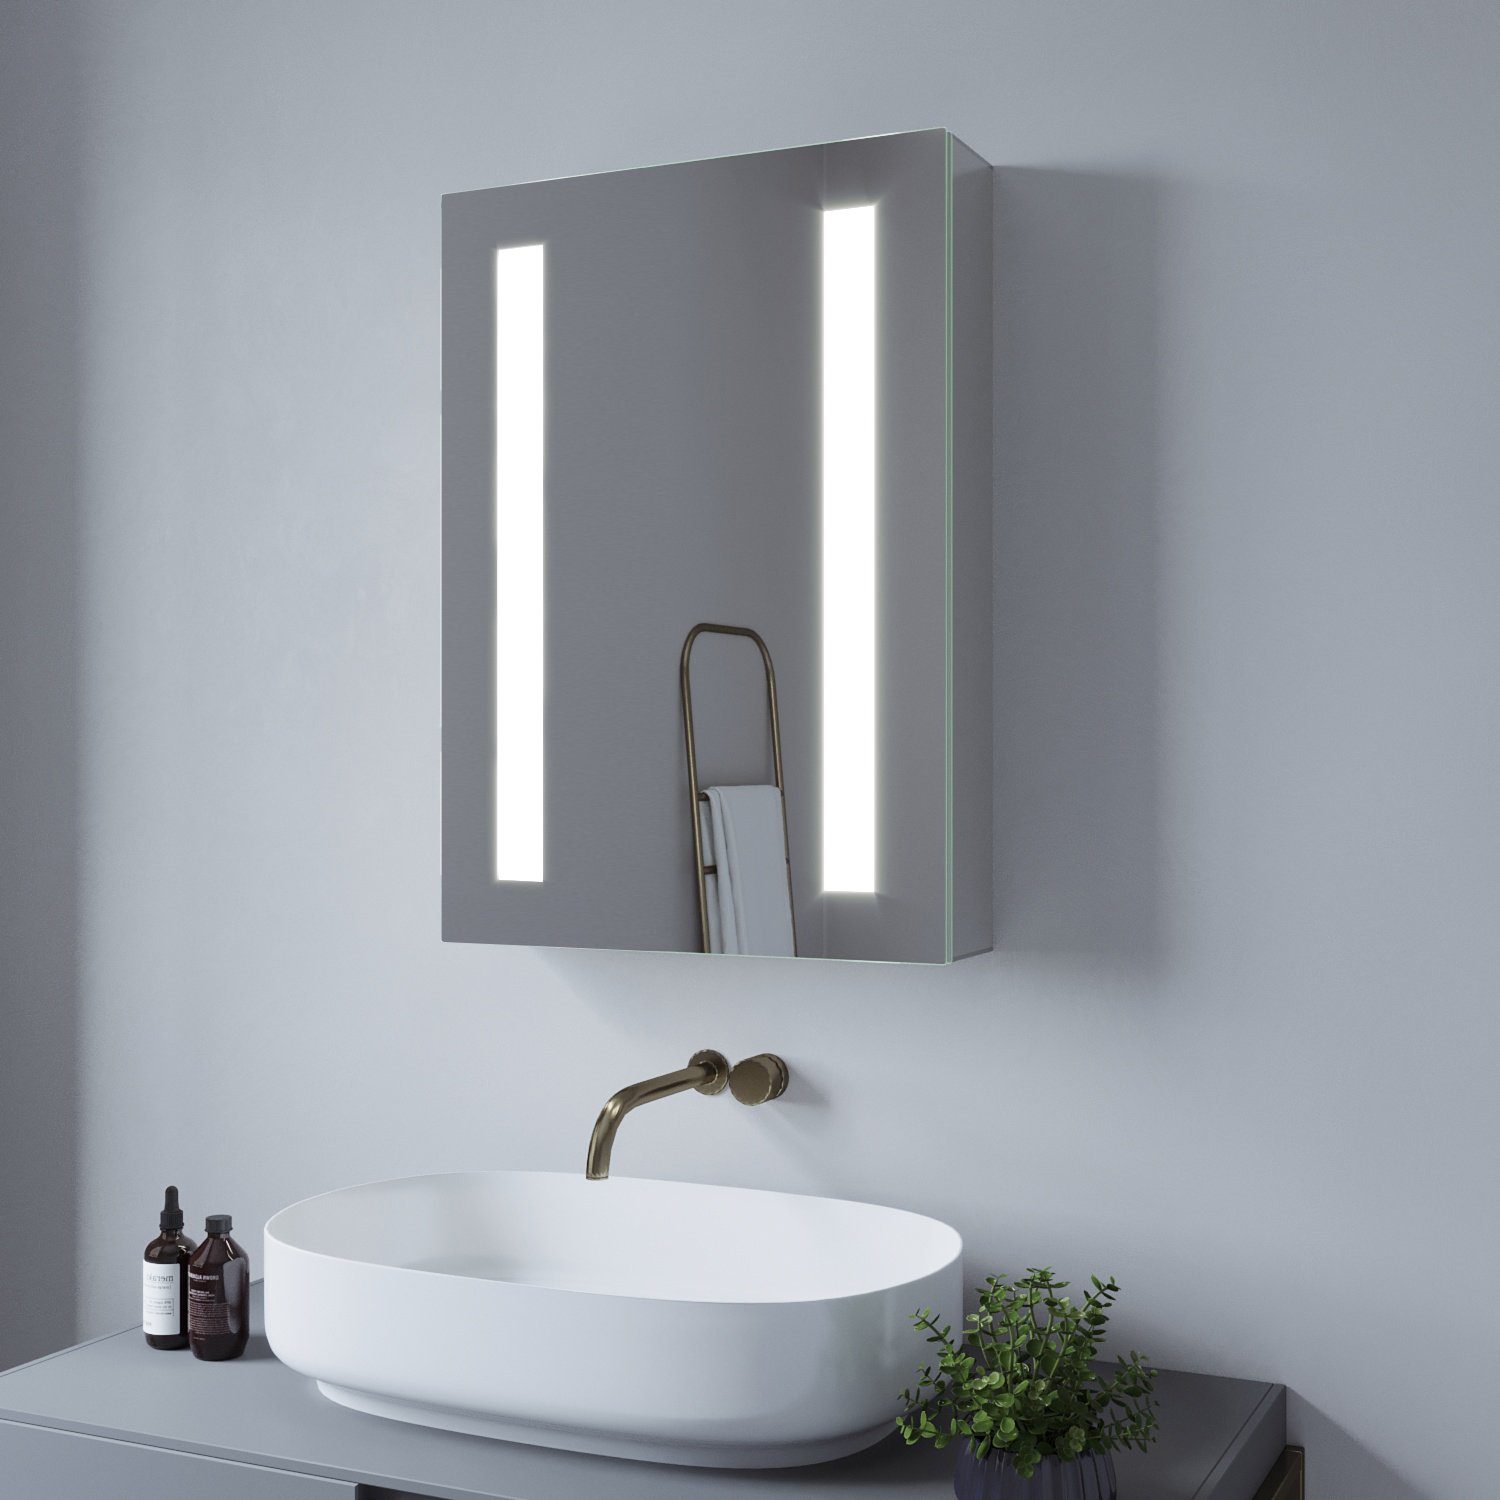 AQUABATOS Badspiegel LED Bad Spiegel mit Beleuchtung